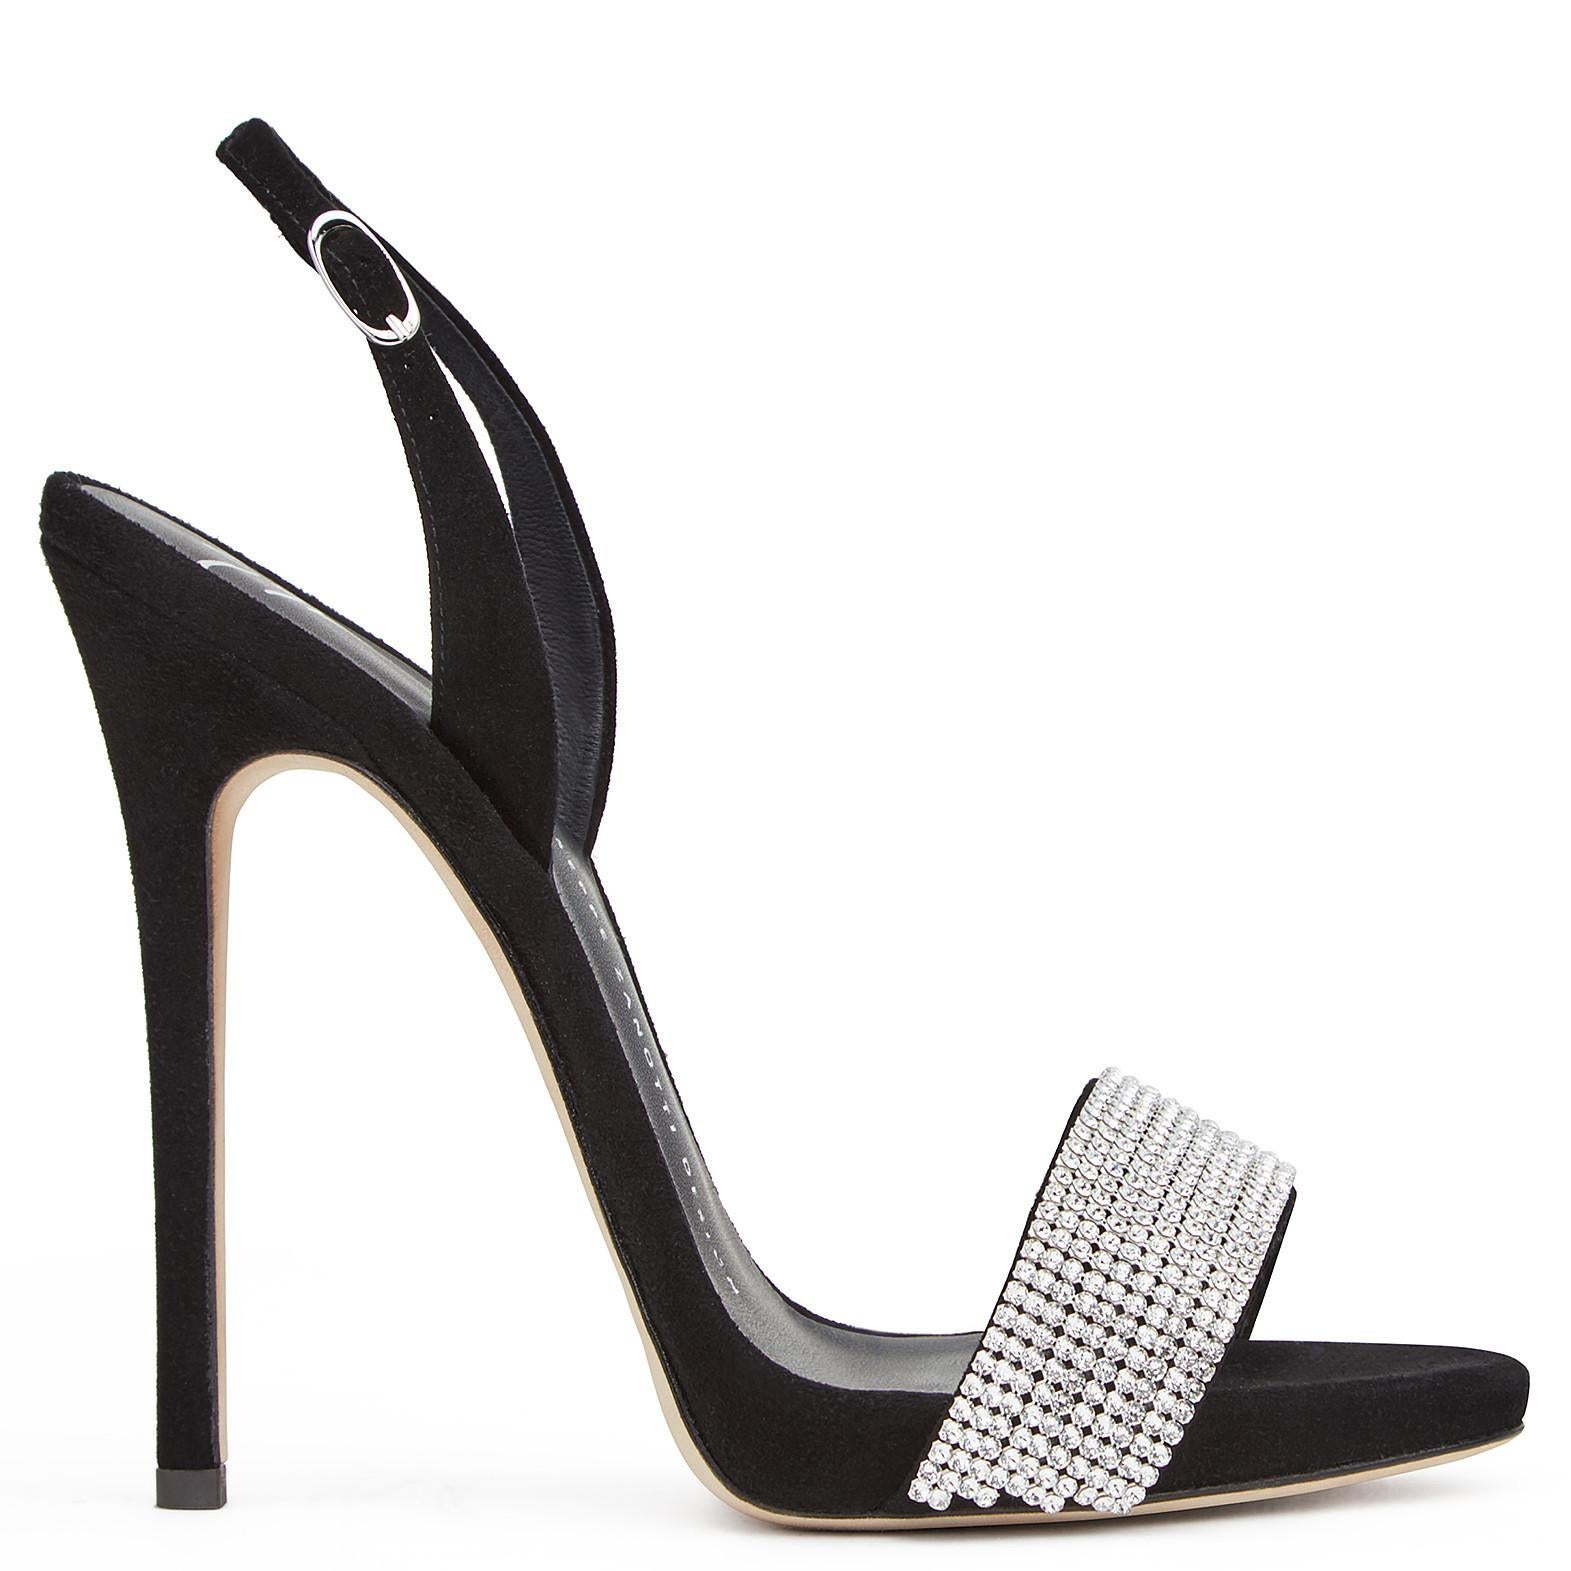 Women's Giuseppe Zanotti NEW Black Suede Crystal Evening Sandals Heels in Box